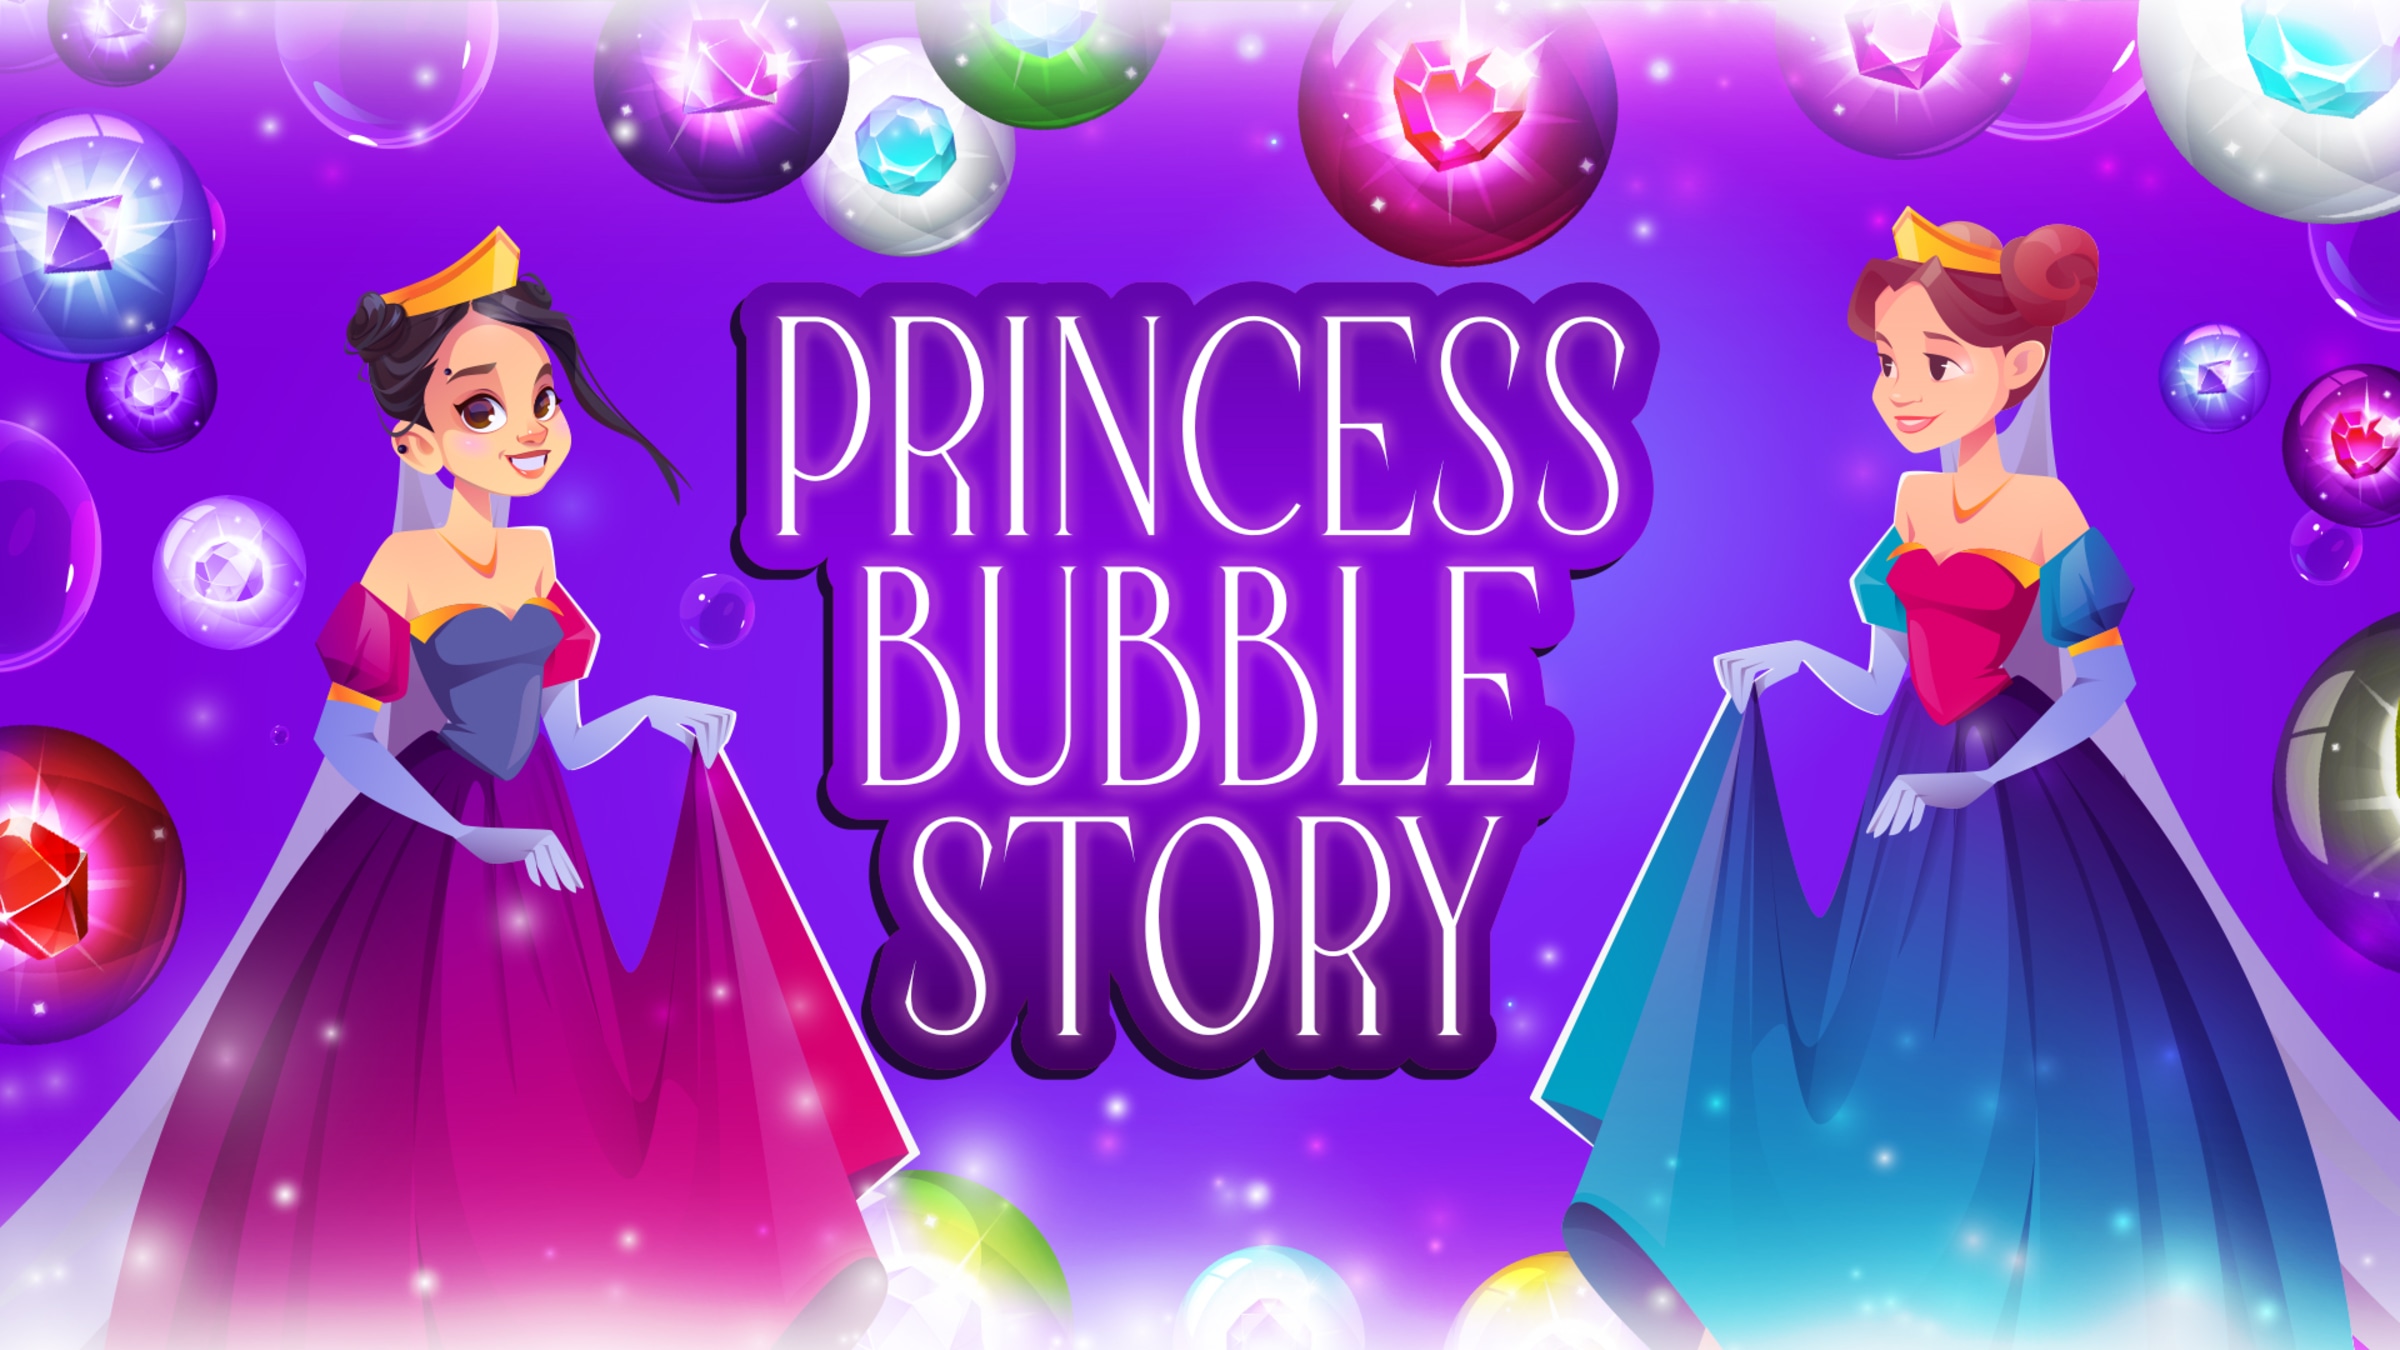 Magic Bubble Shooter: Classic Bubbles Arcade for Nintendo Switch - Nintendo  Official Site